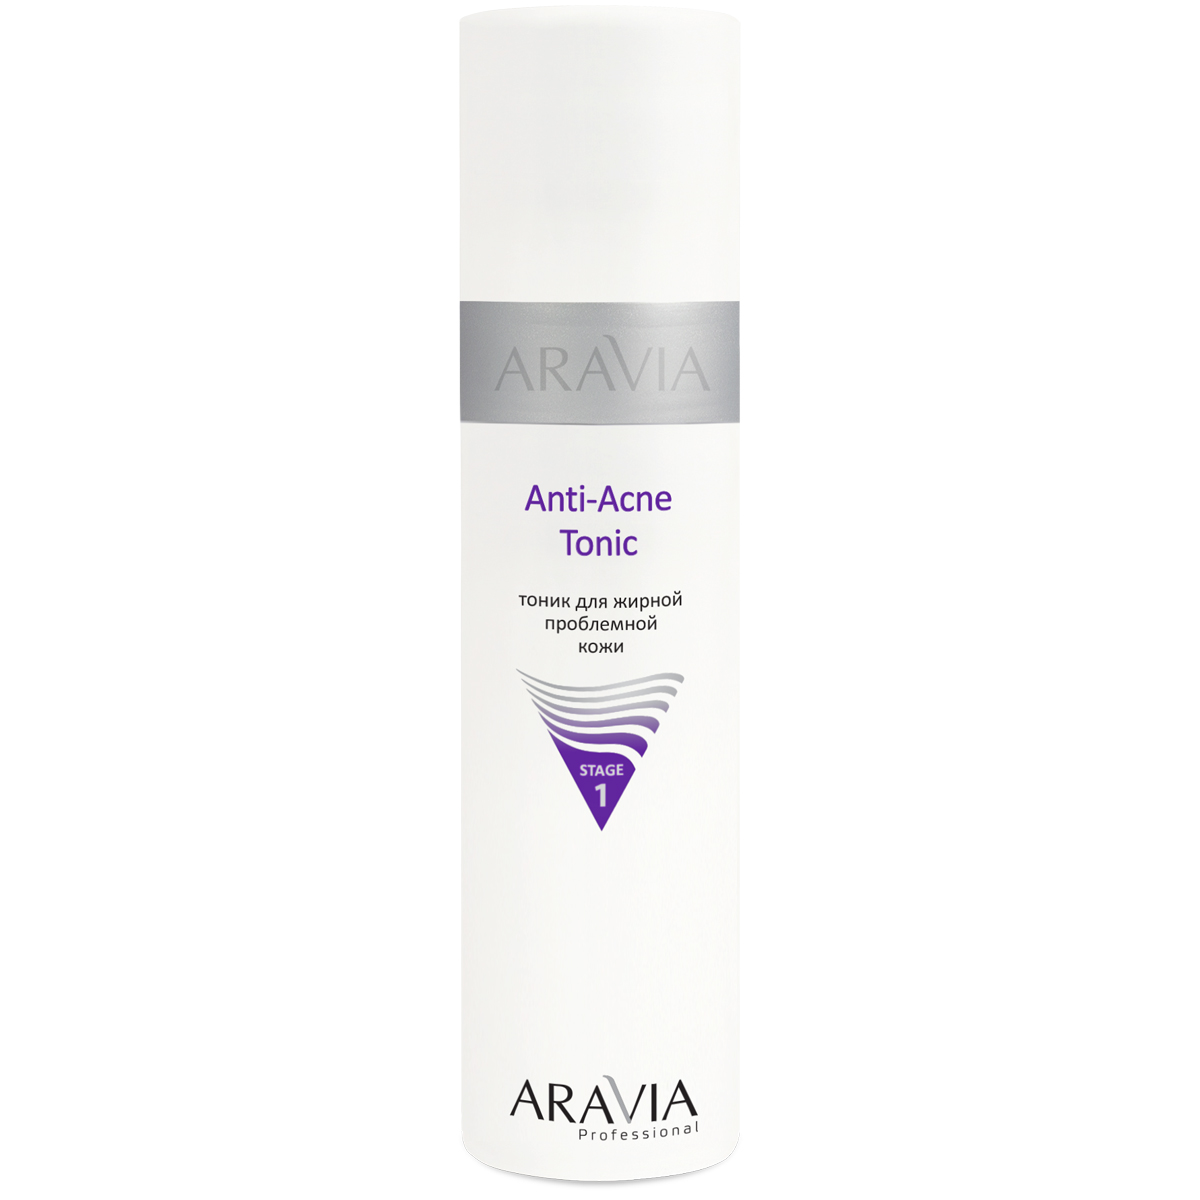 Тоник для жирной проблемной кожи Anti-Acne Tonic, 250 мл, ARAVIA Professional. 6201